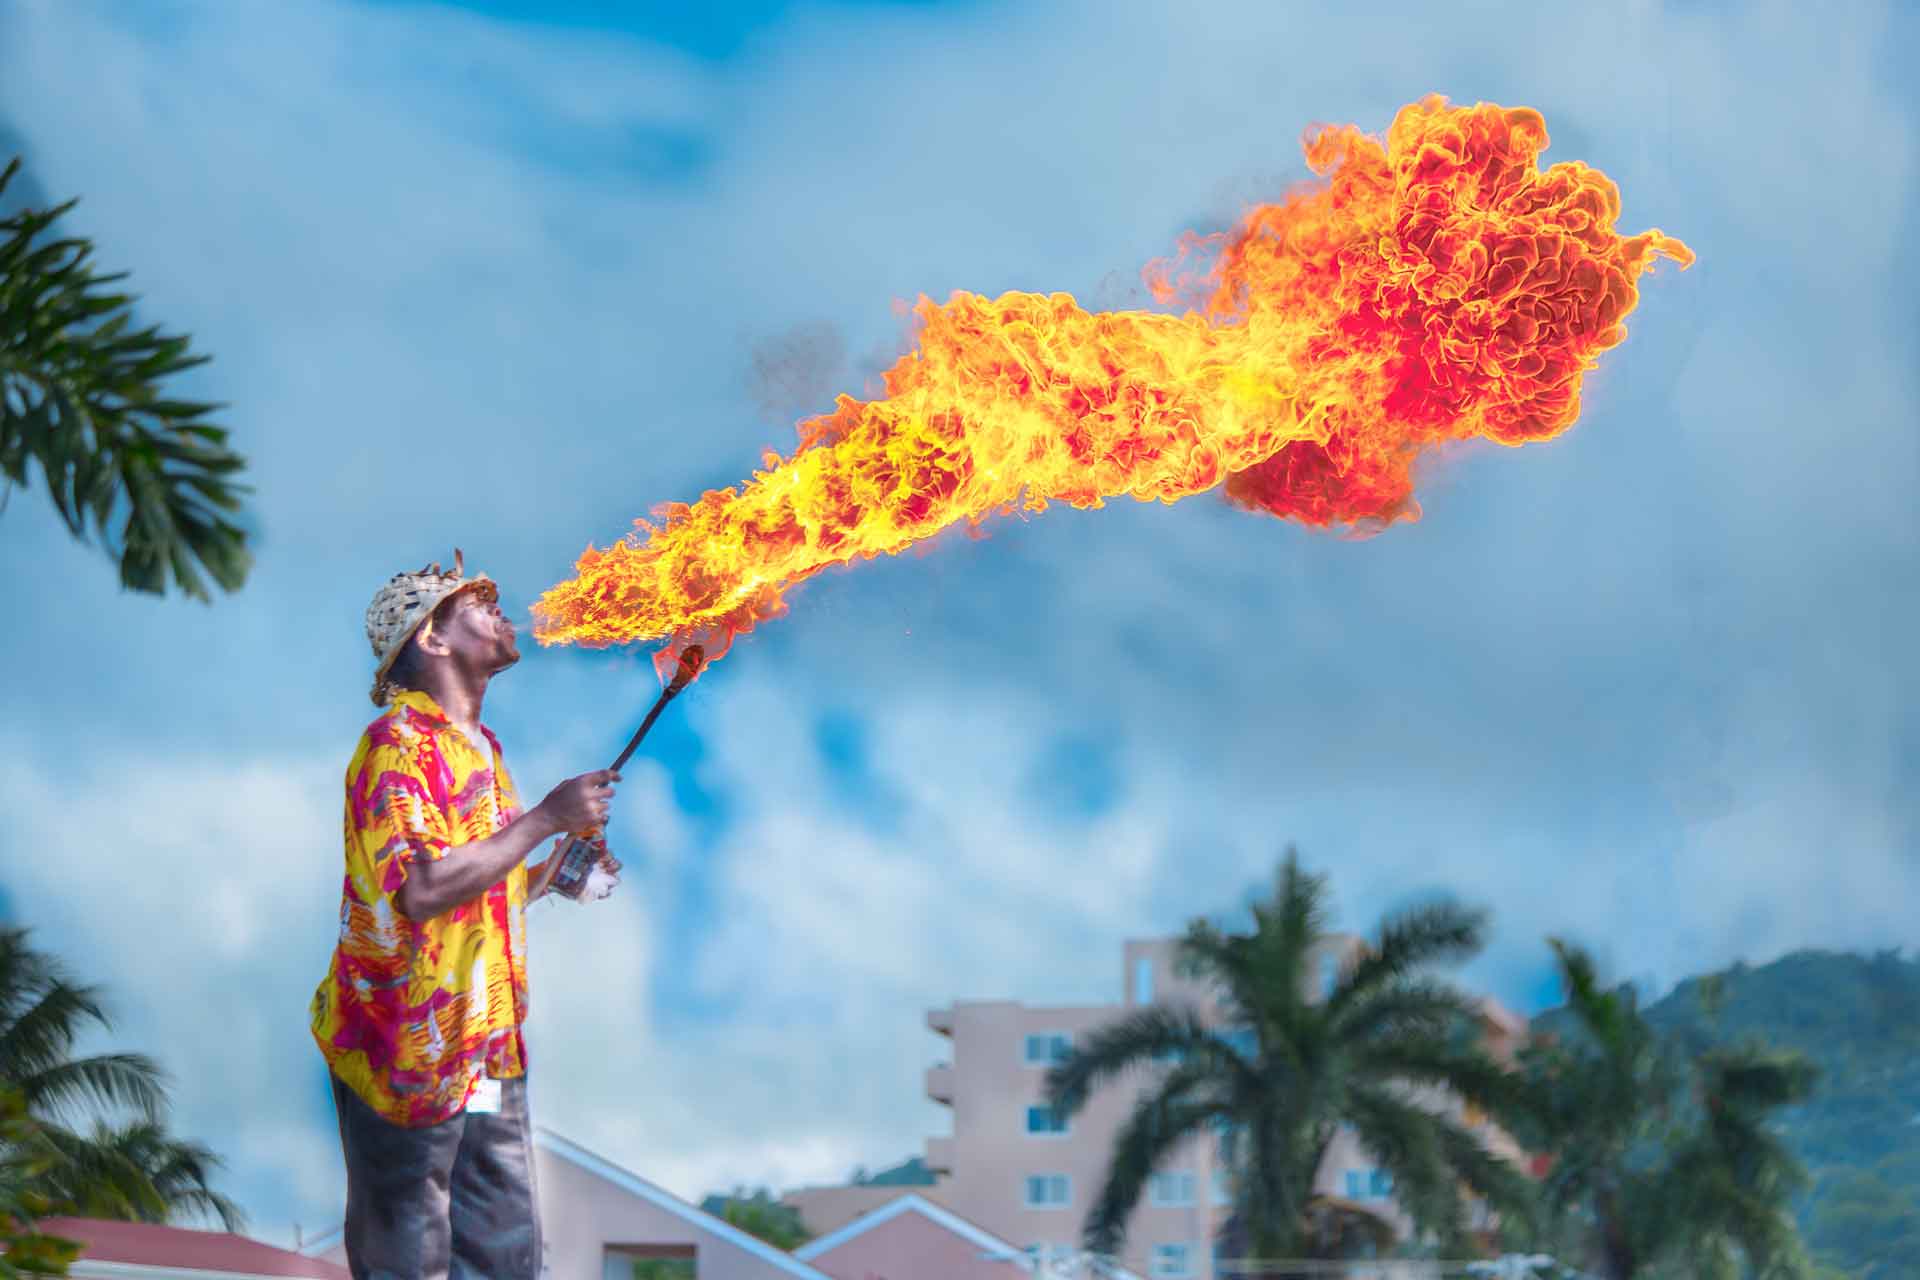 Man blowing fire in Ocho Rios, Jamaica